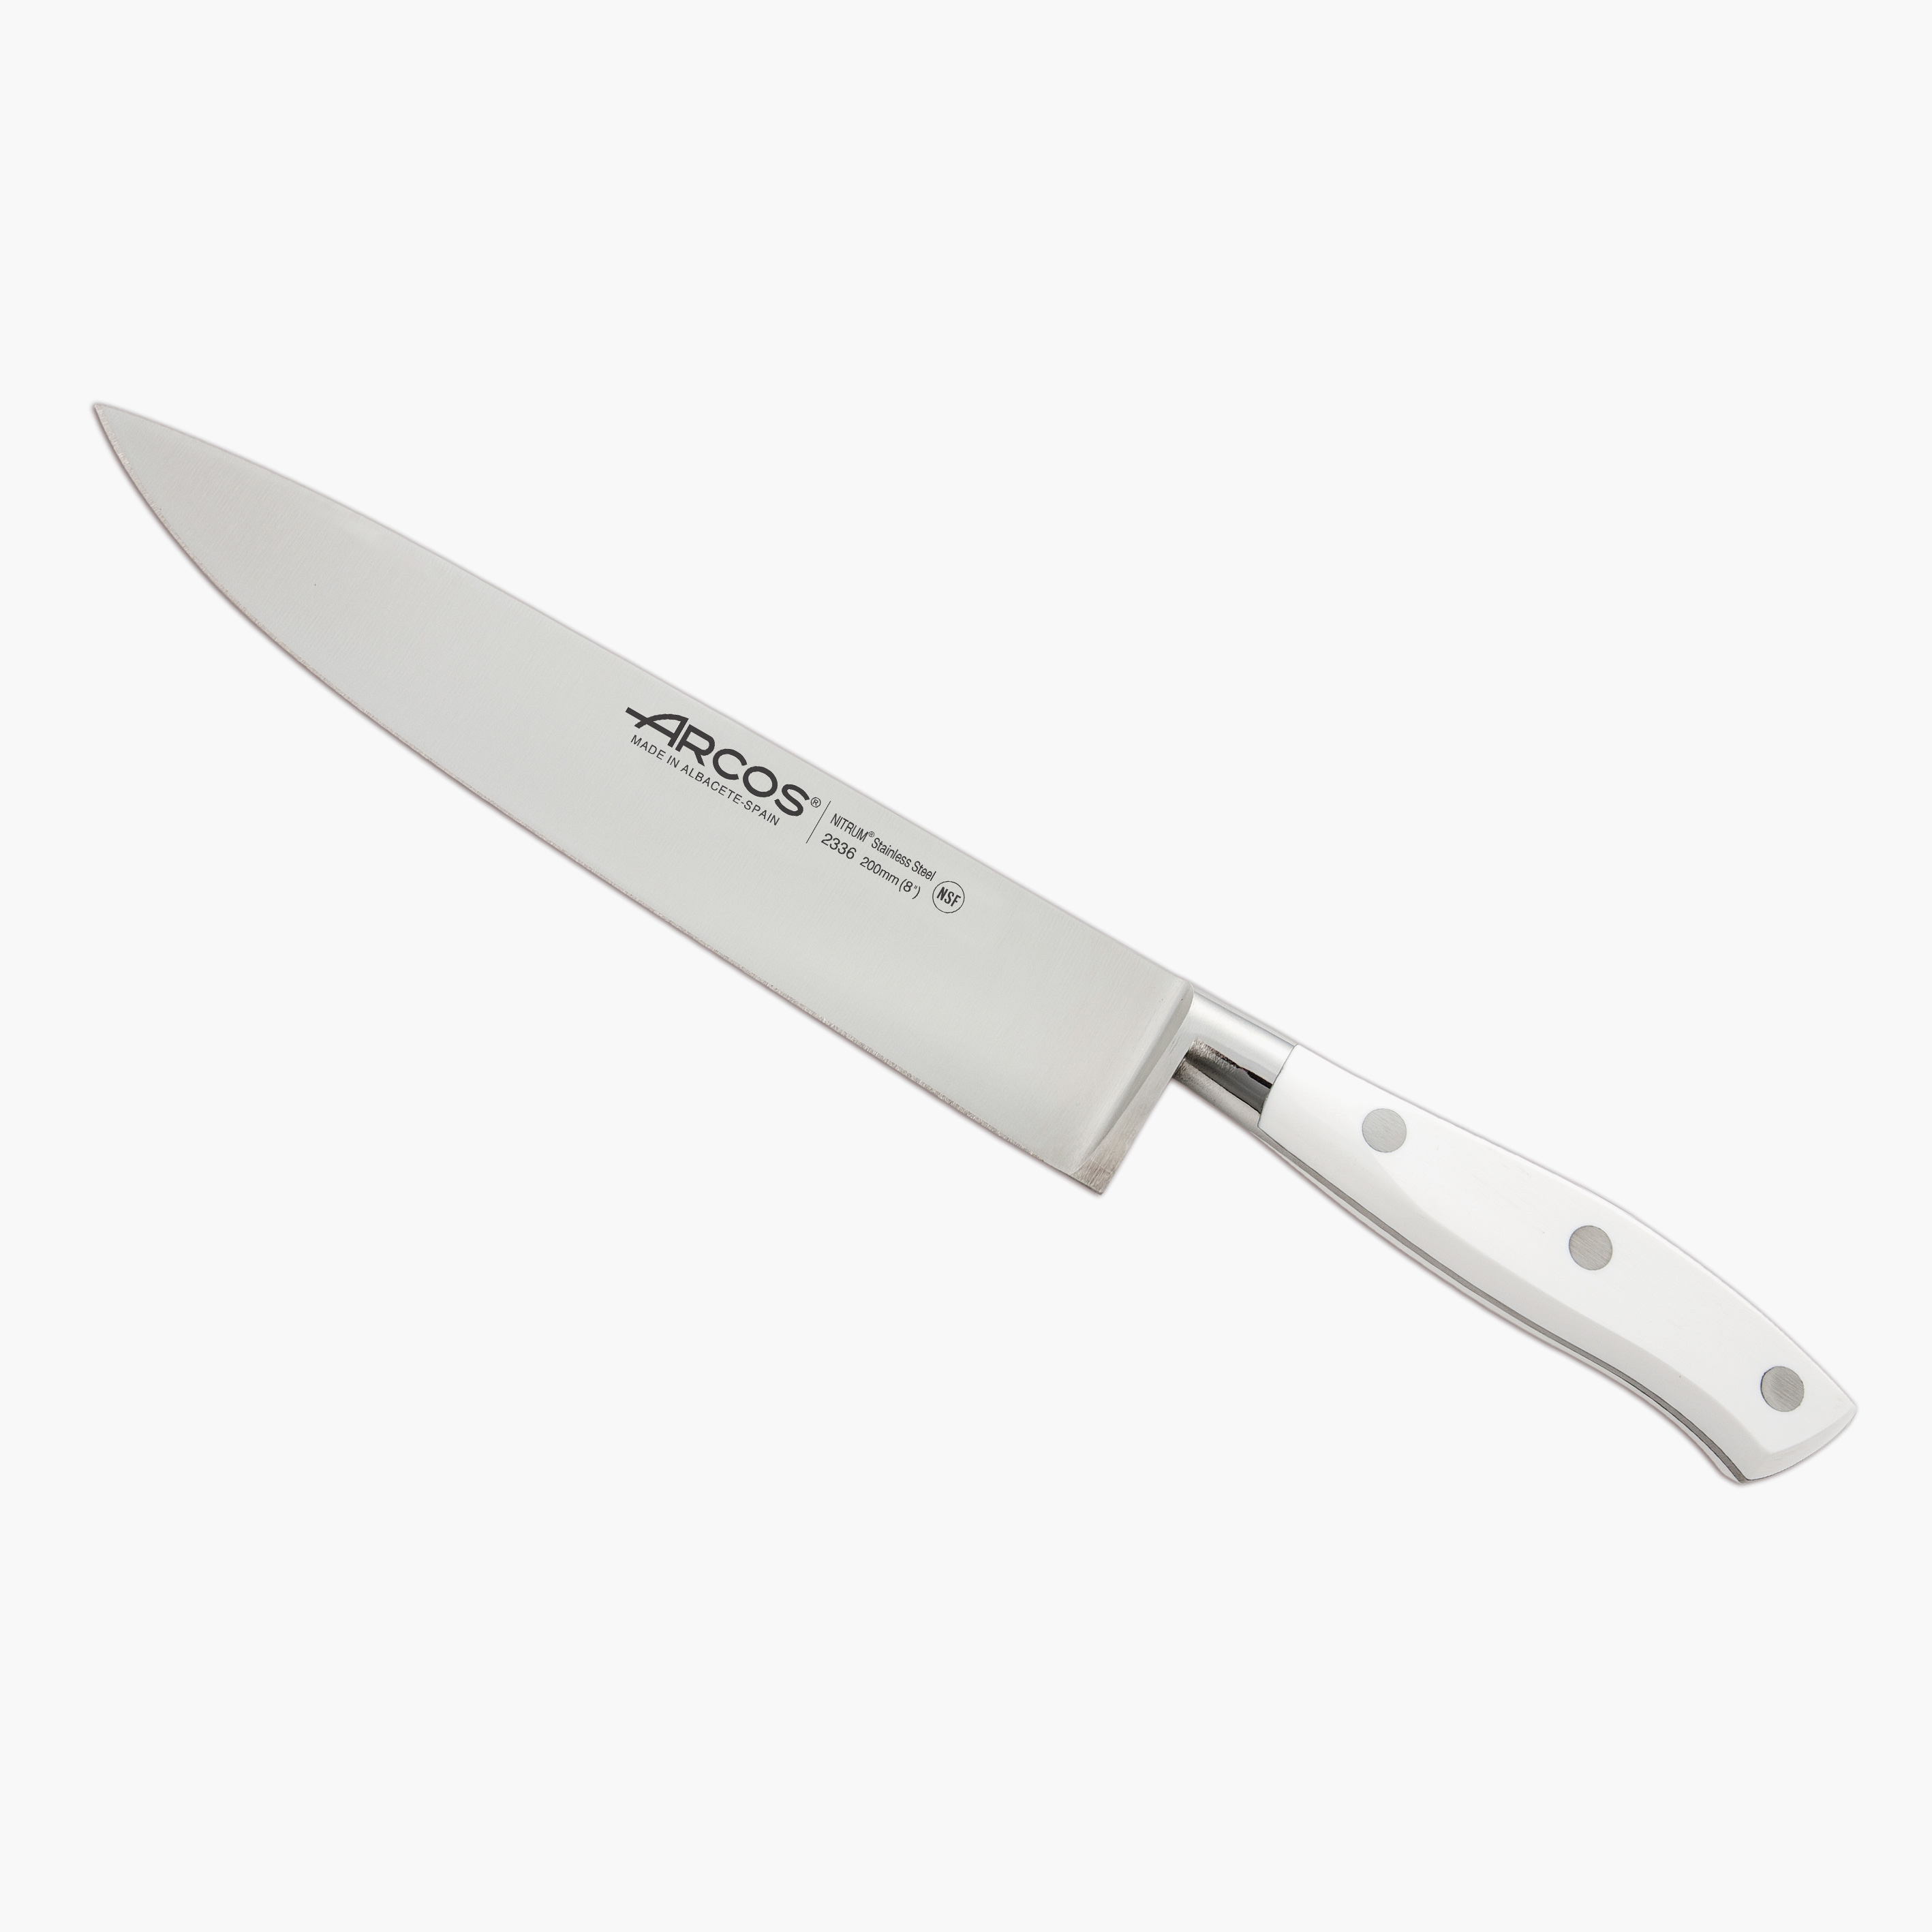 https://cuchillos-profesionales.com/biblioteca/productes/cuchillo-arcos-233624.jpg